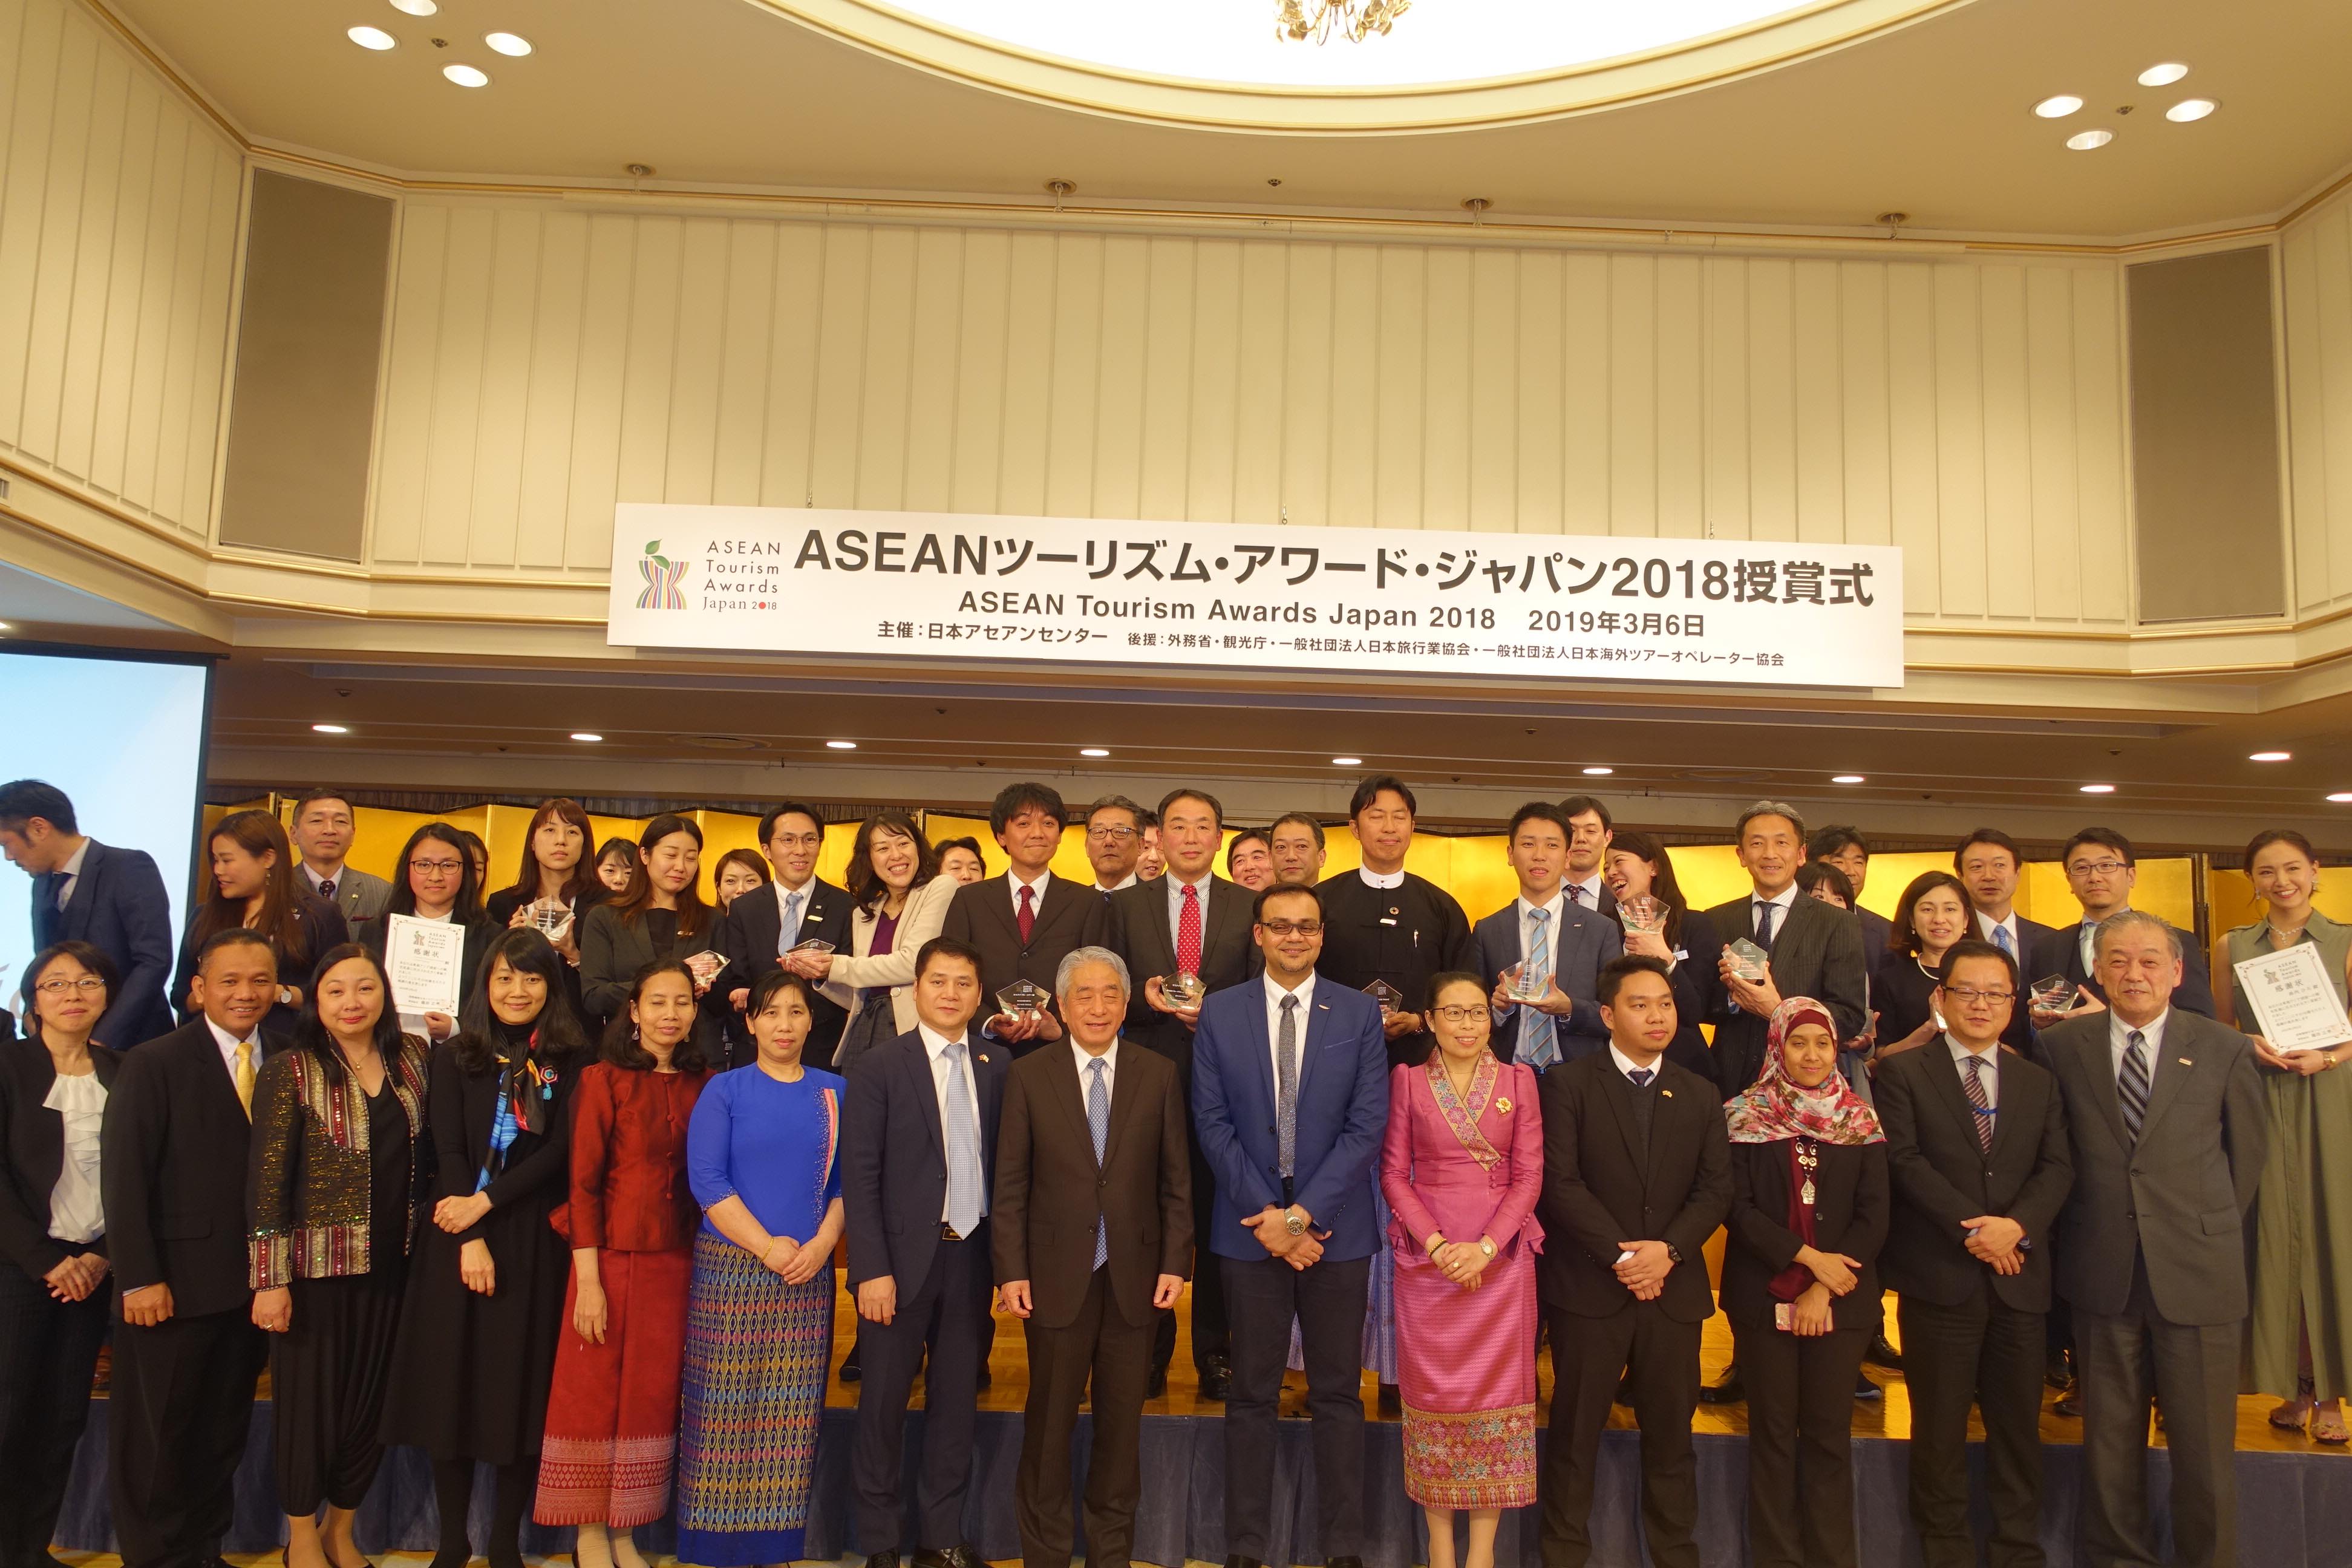 ASEANツーリズム・アワード2018授賞式、6部門11ツアーを表彰、ブルネイ航空の定期便利用ツアーも